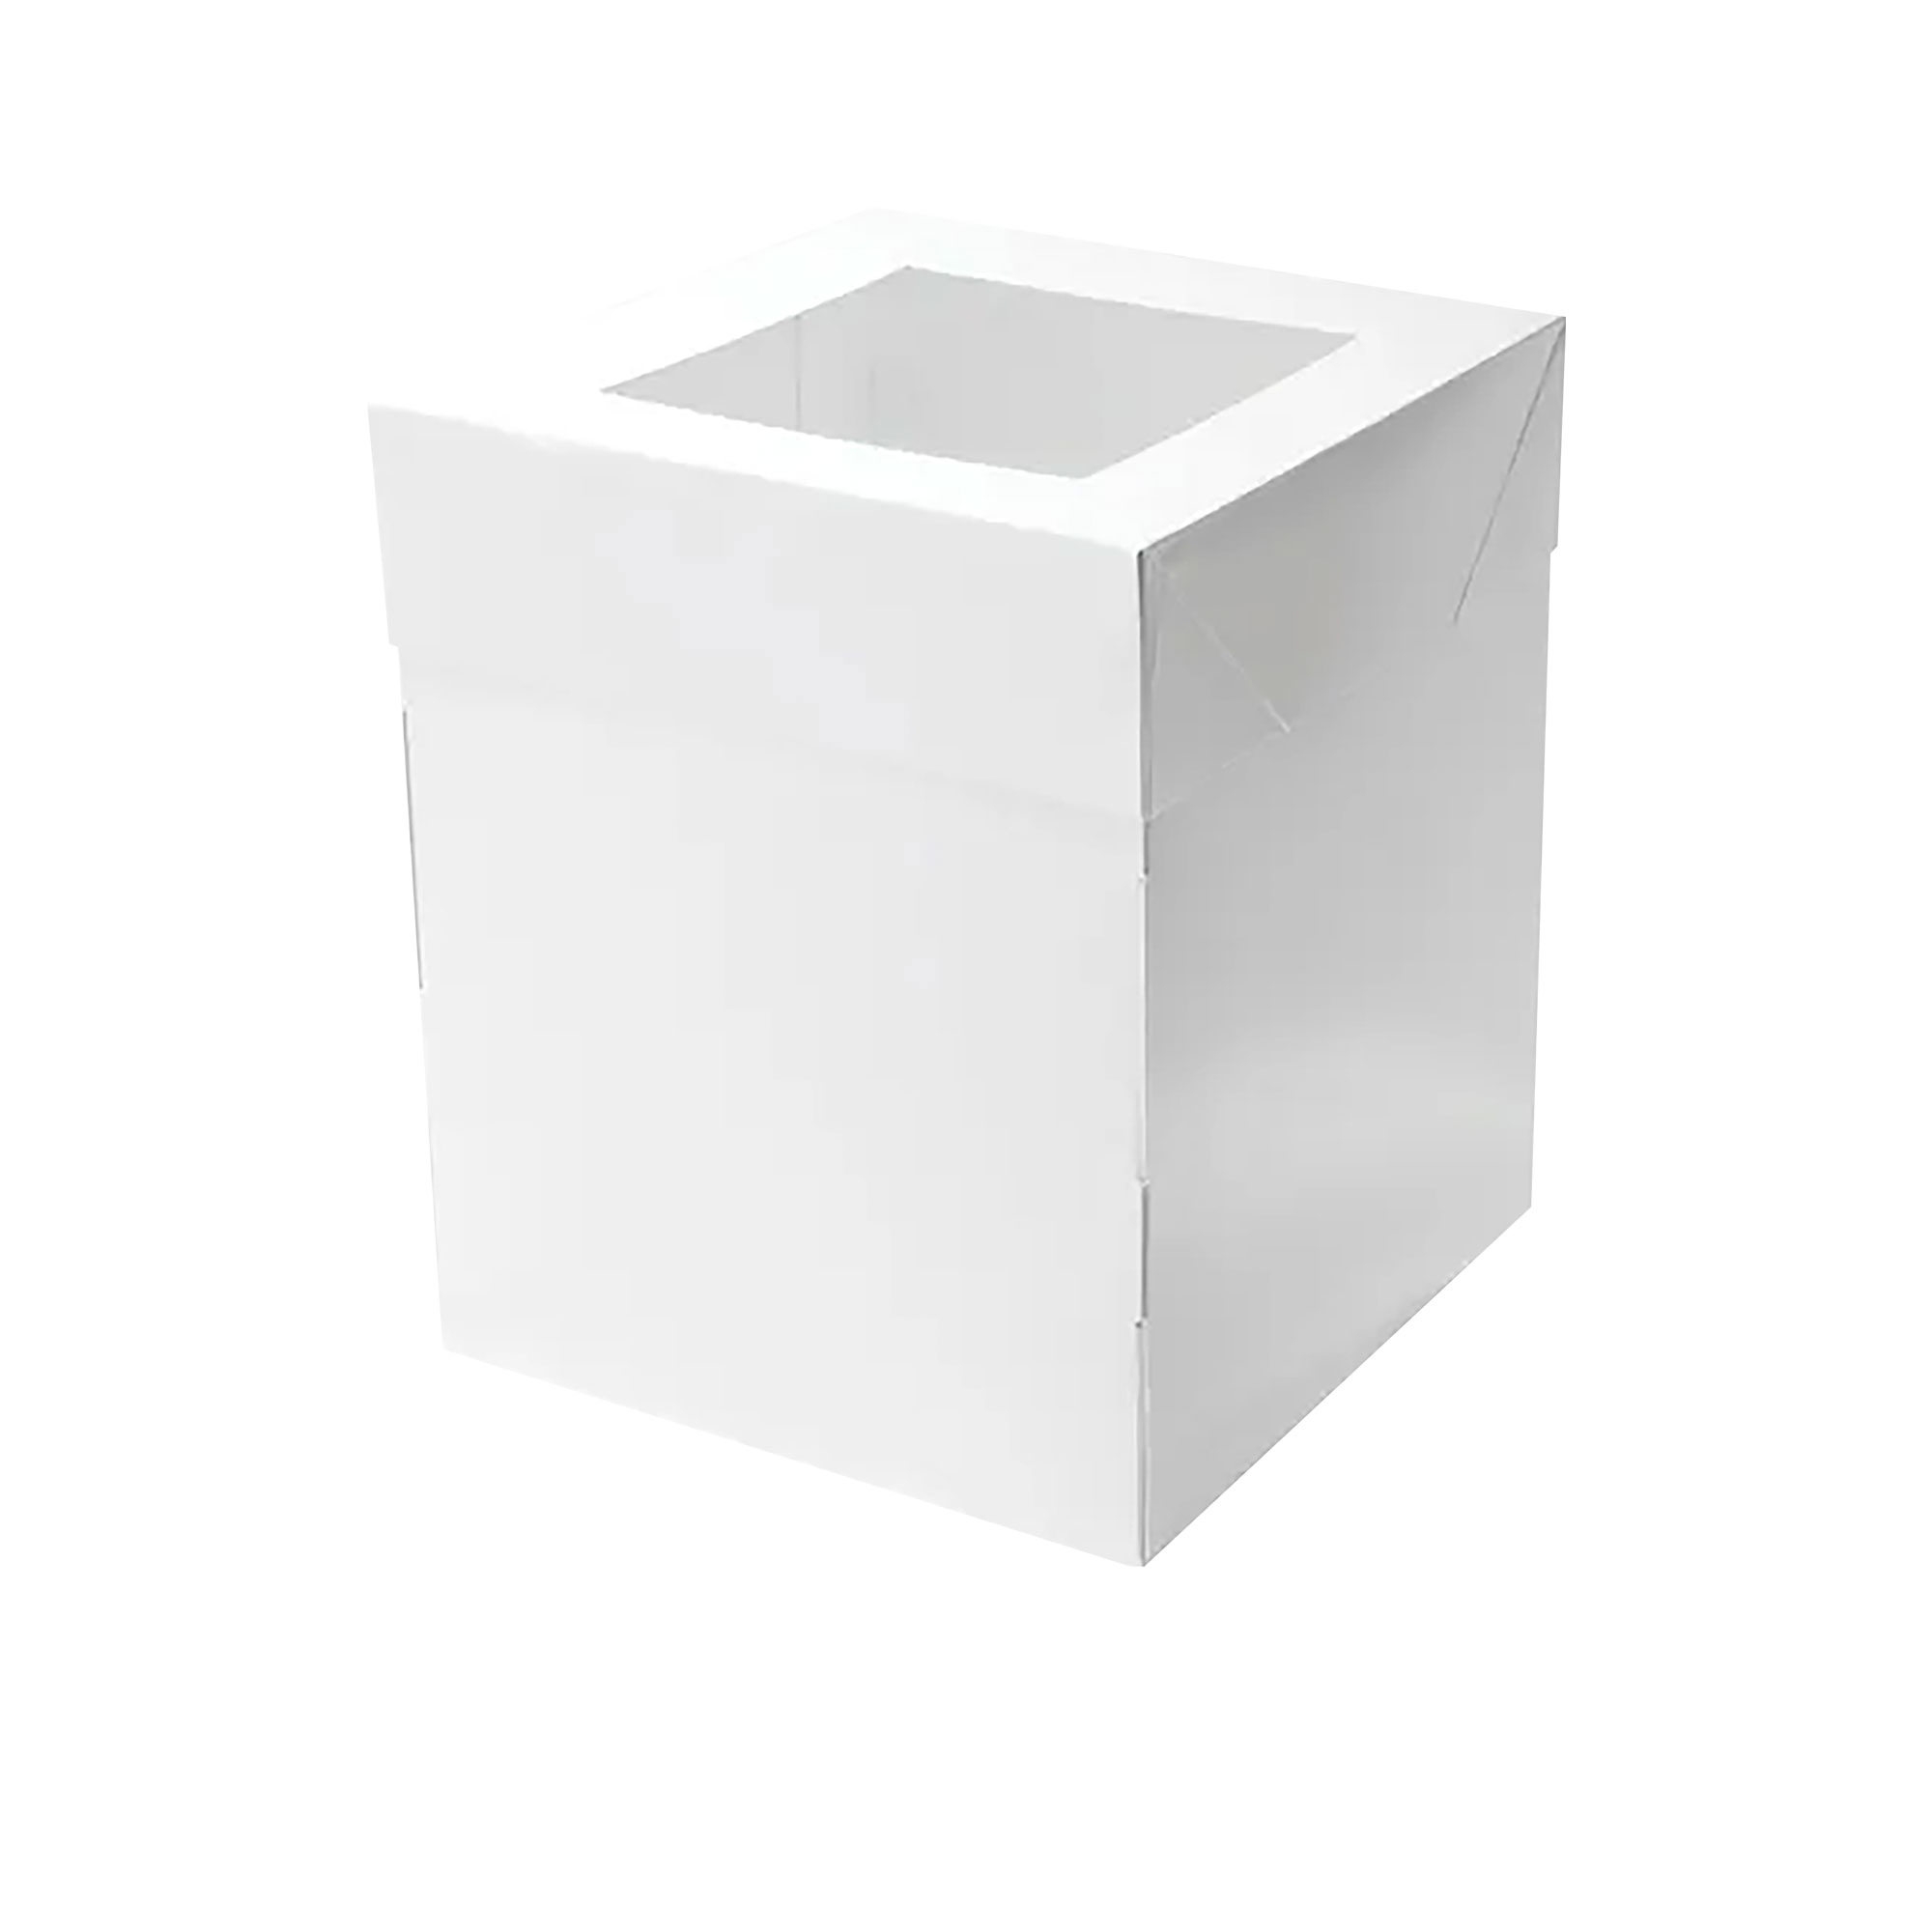 Mondo Square Tall Cake Box 20x20x25cm White Image 1